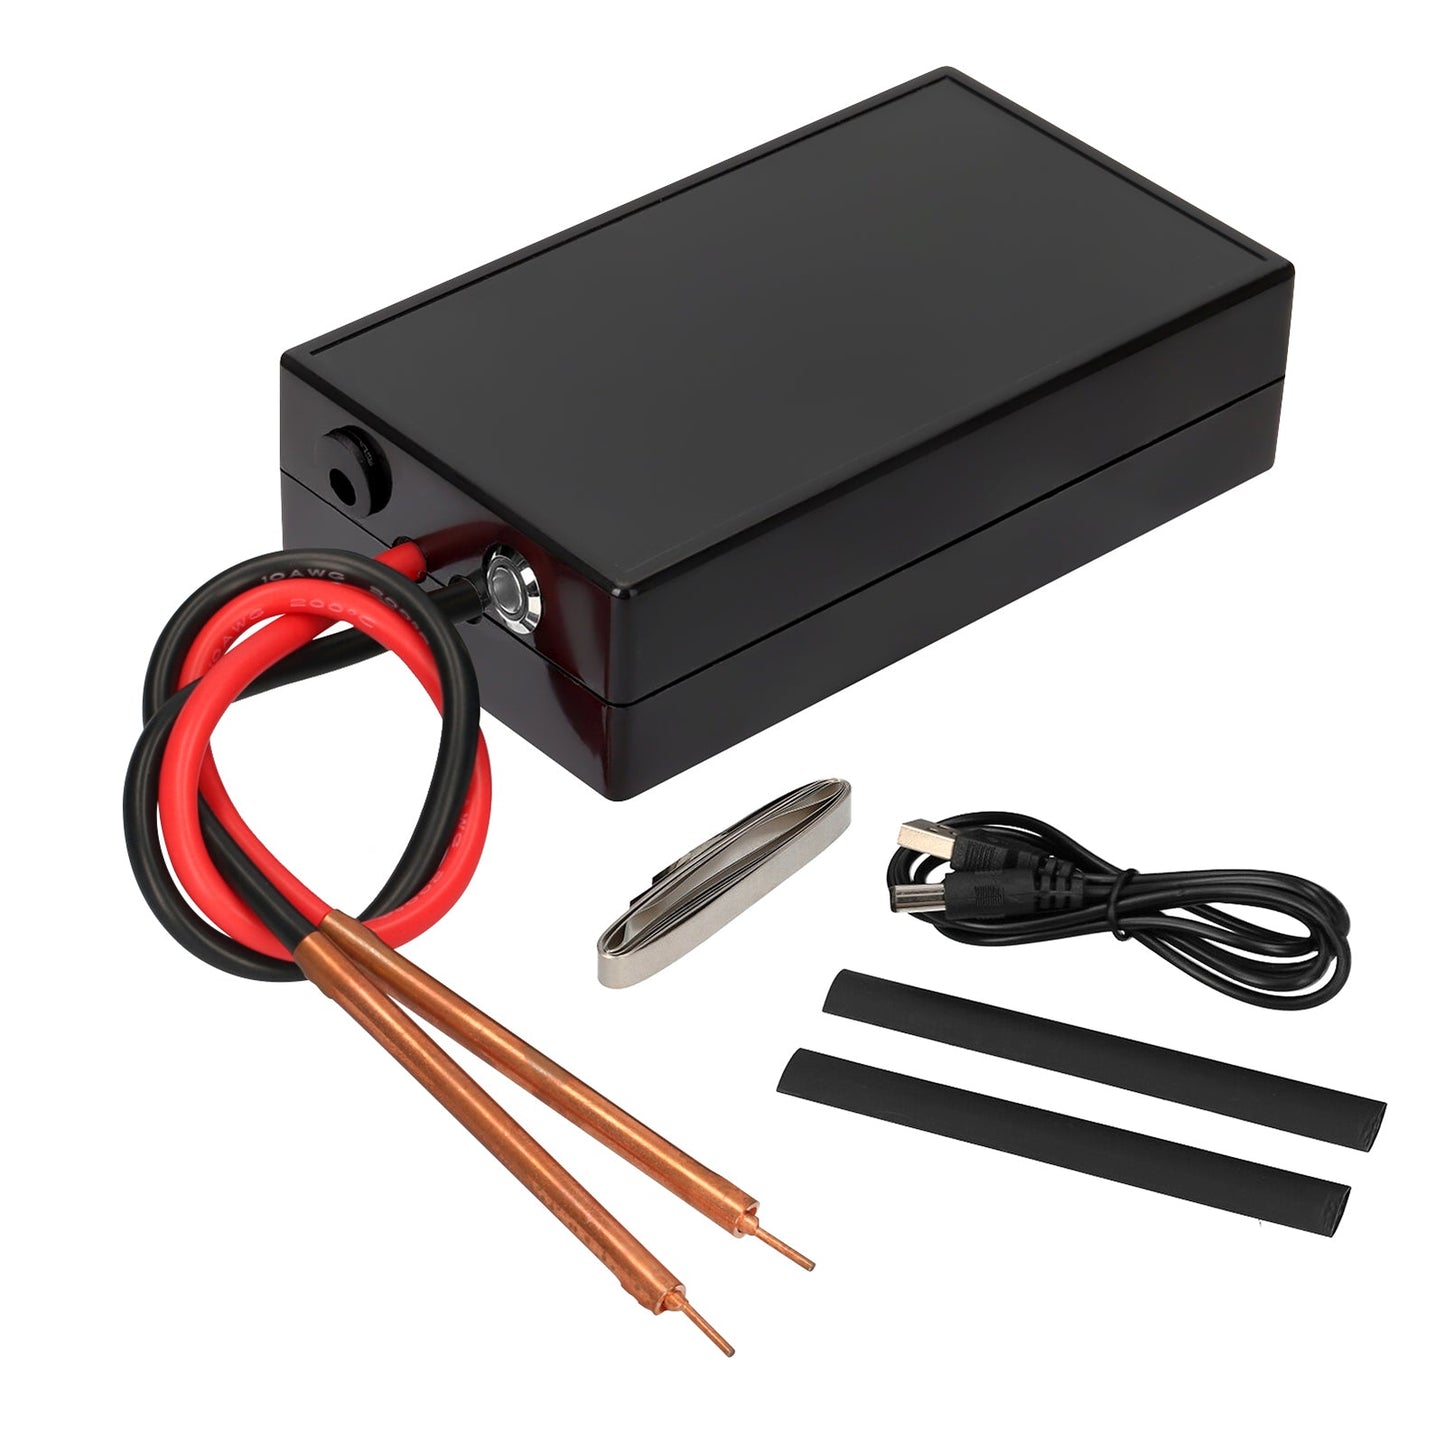 Portable 6 Gears Adjustable Mini Spot Welding Machine Kit For 18650 Battery